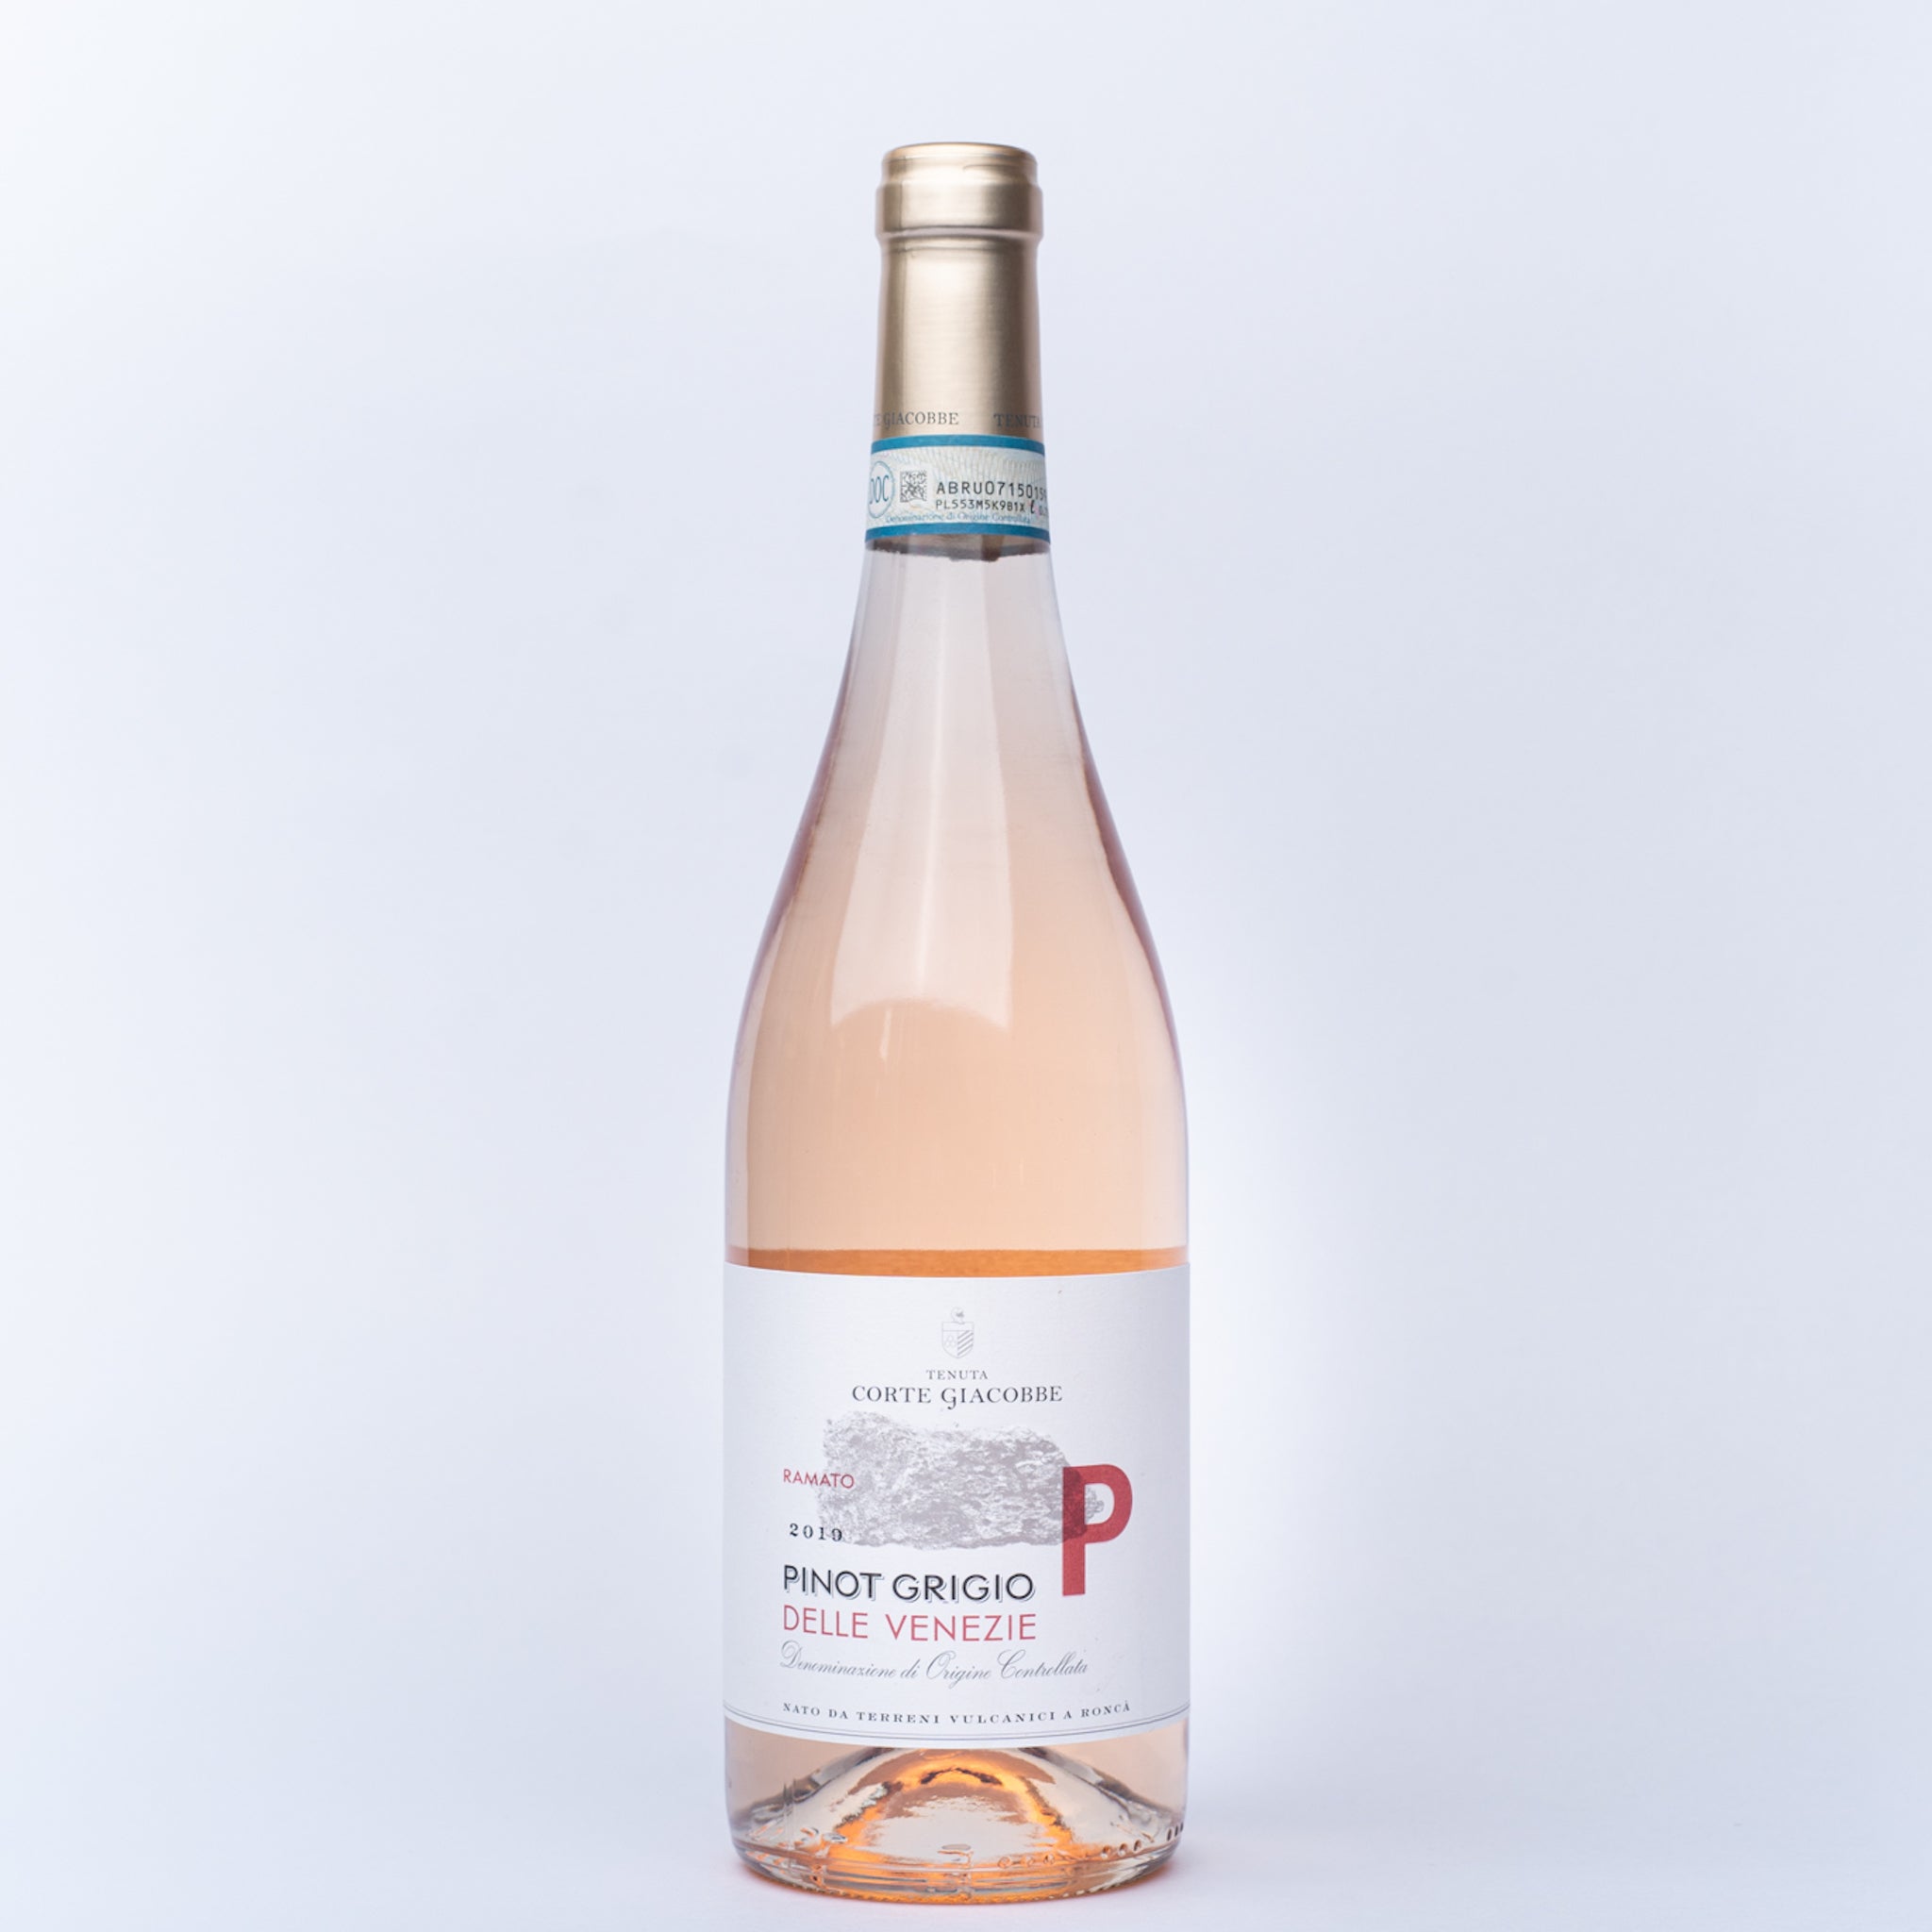 A 750ml bottle of Corte Giacobbe Pinot Grigio Ramato delle Venezie Rose pink wine.